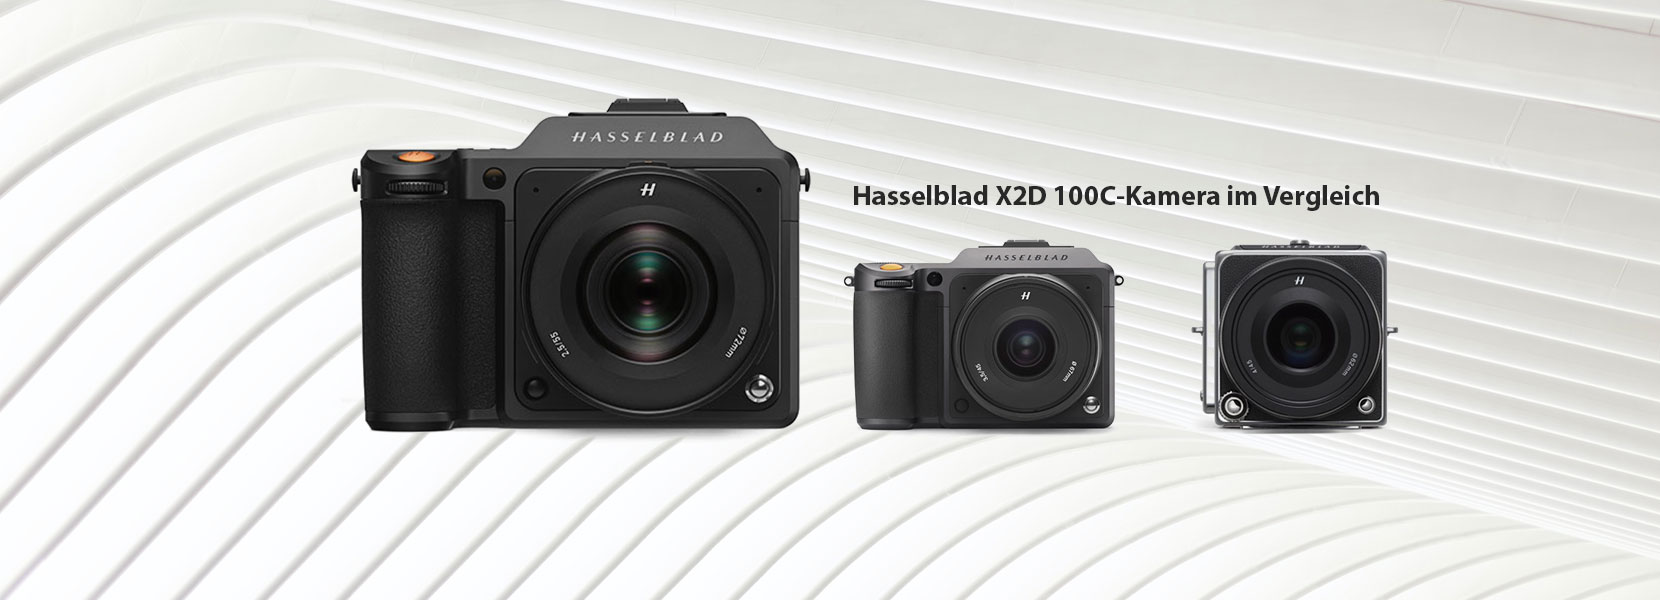 Hasselblad X2D 100C Systemkamera vergleich bei Fotomax.de